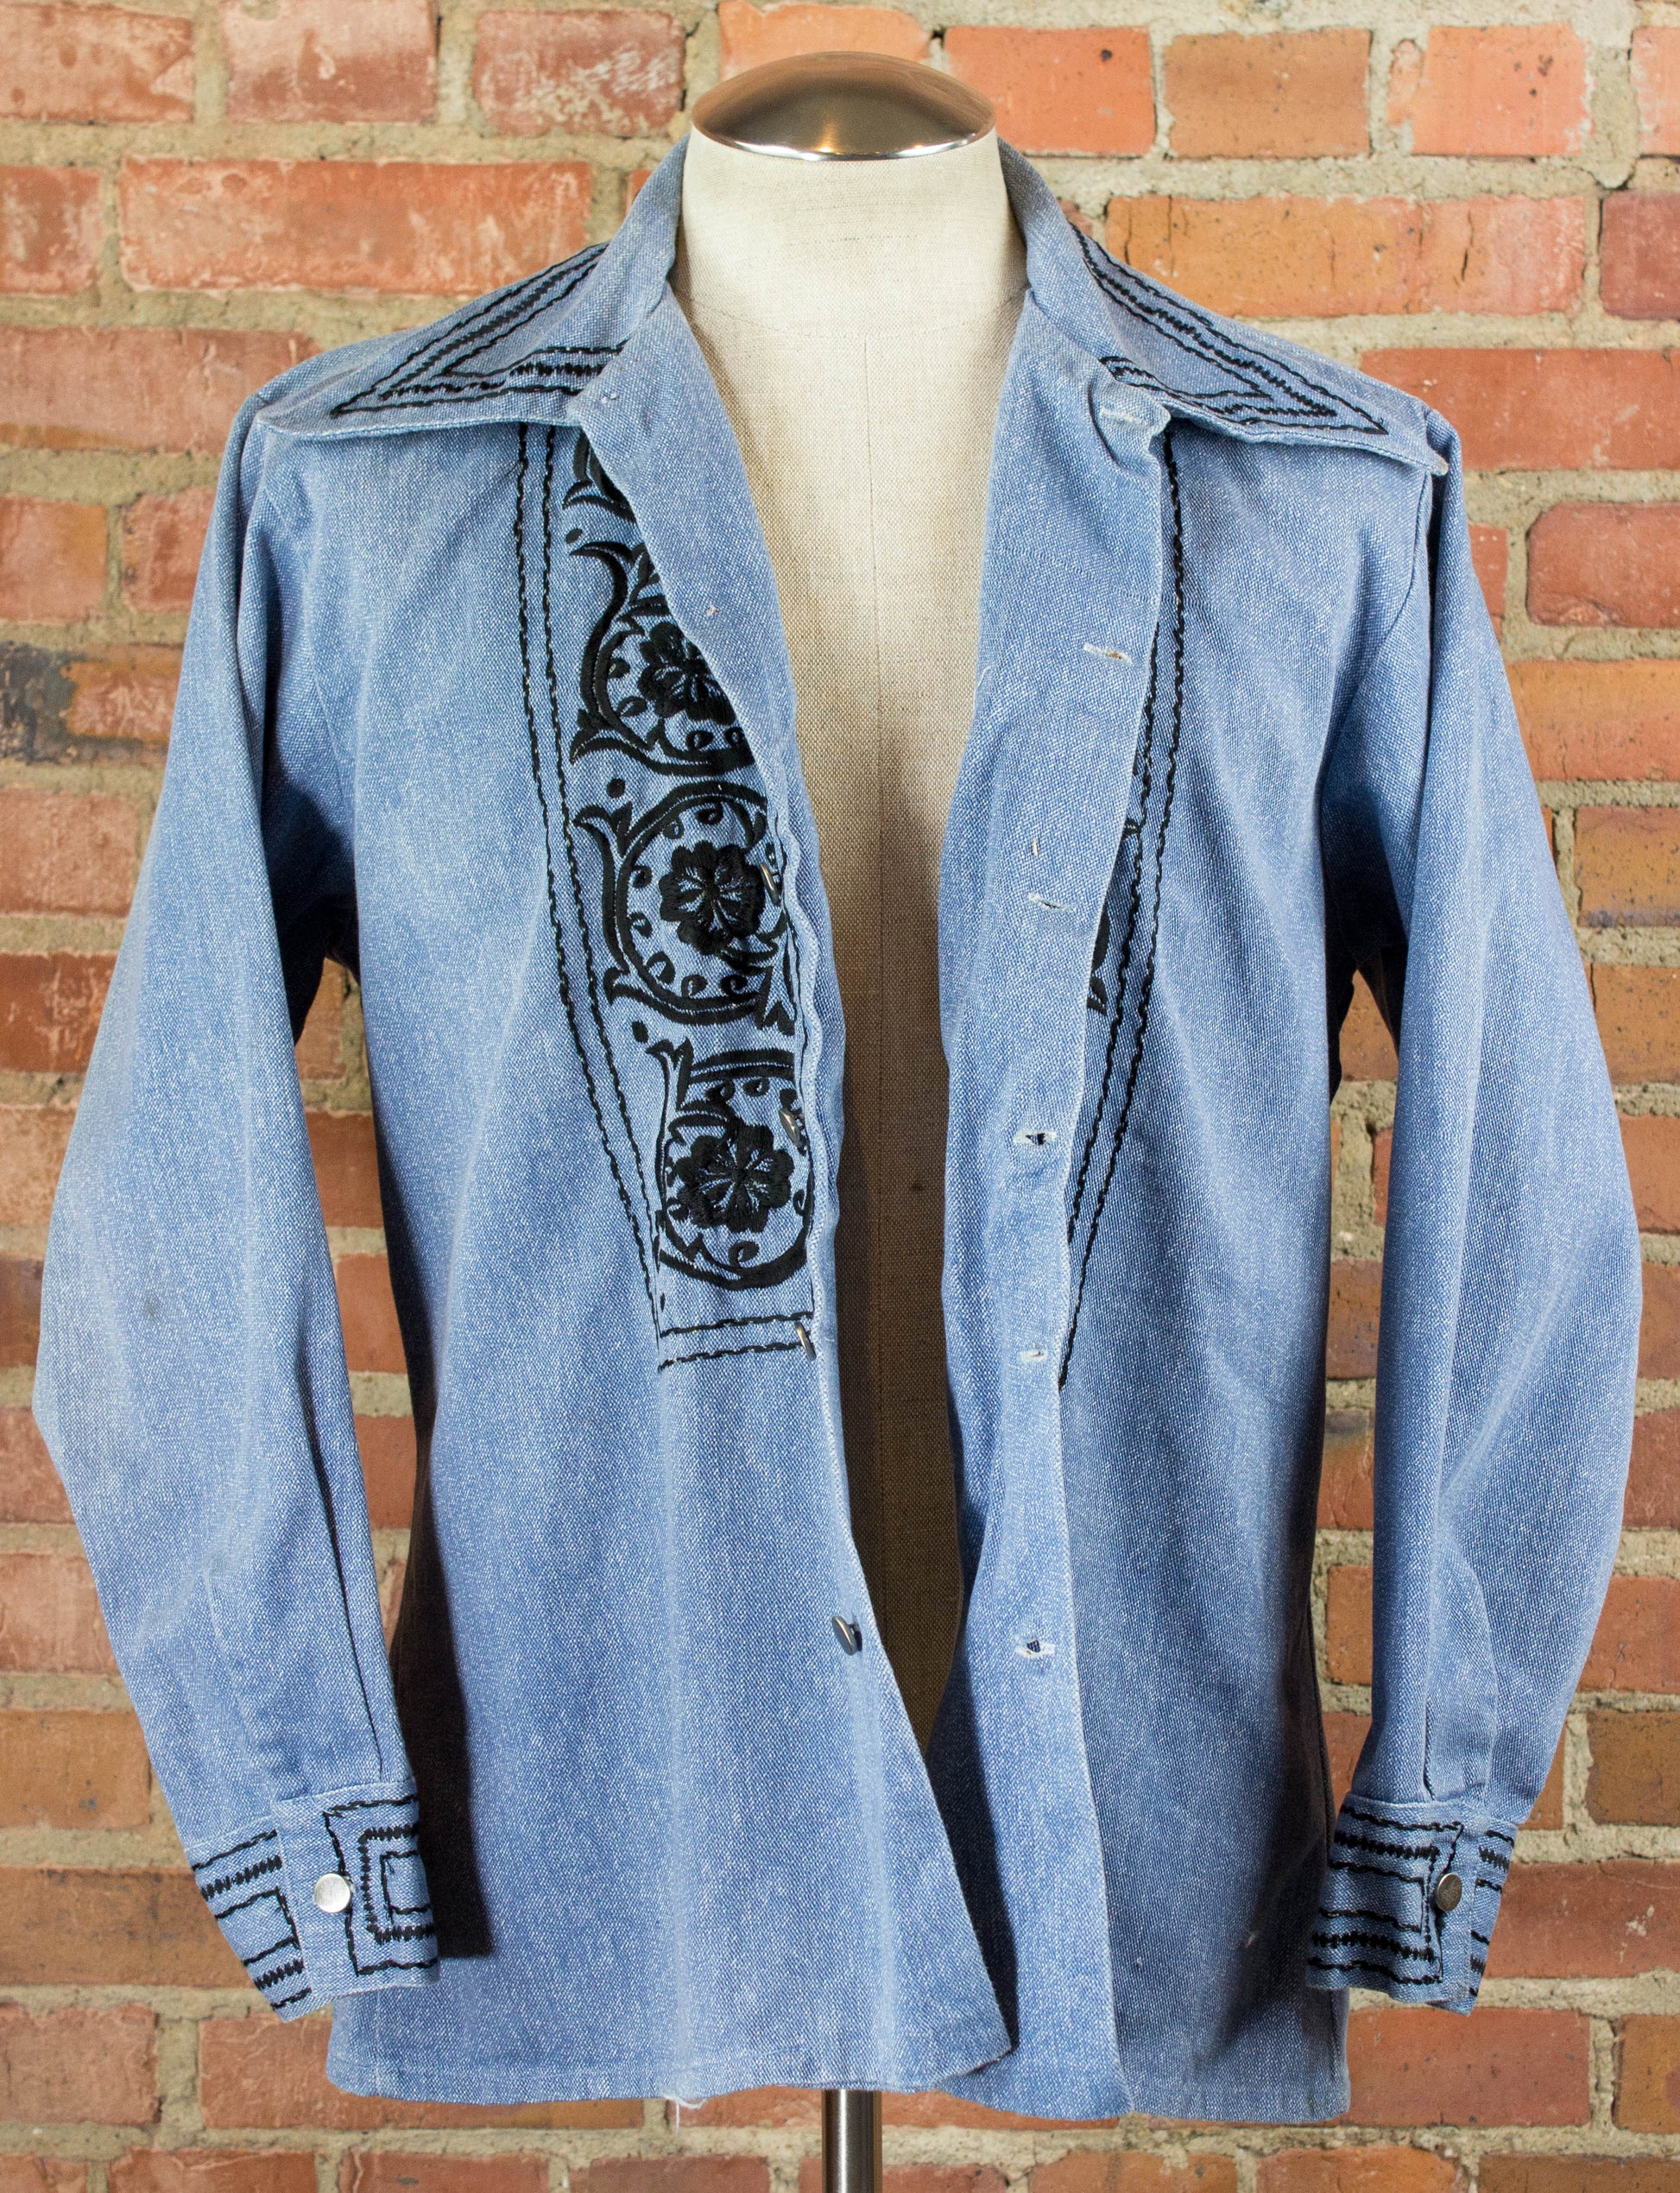 Vintage 70s Ethnic Embroidered Denim Jacket Unisex Large